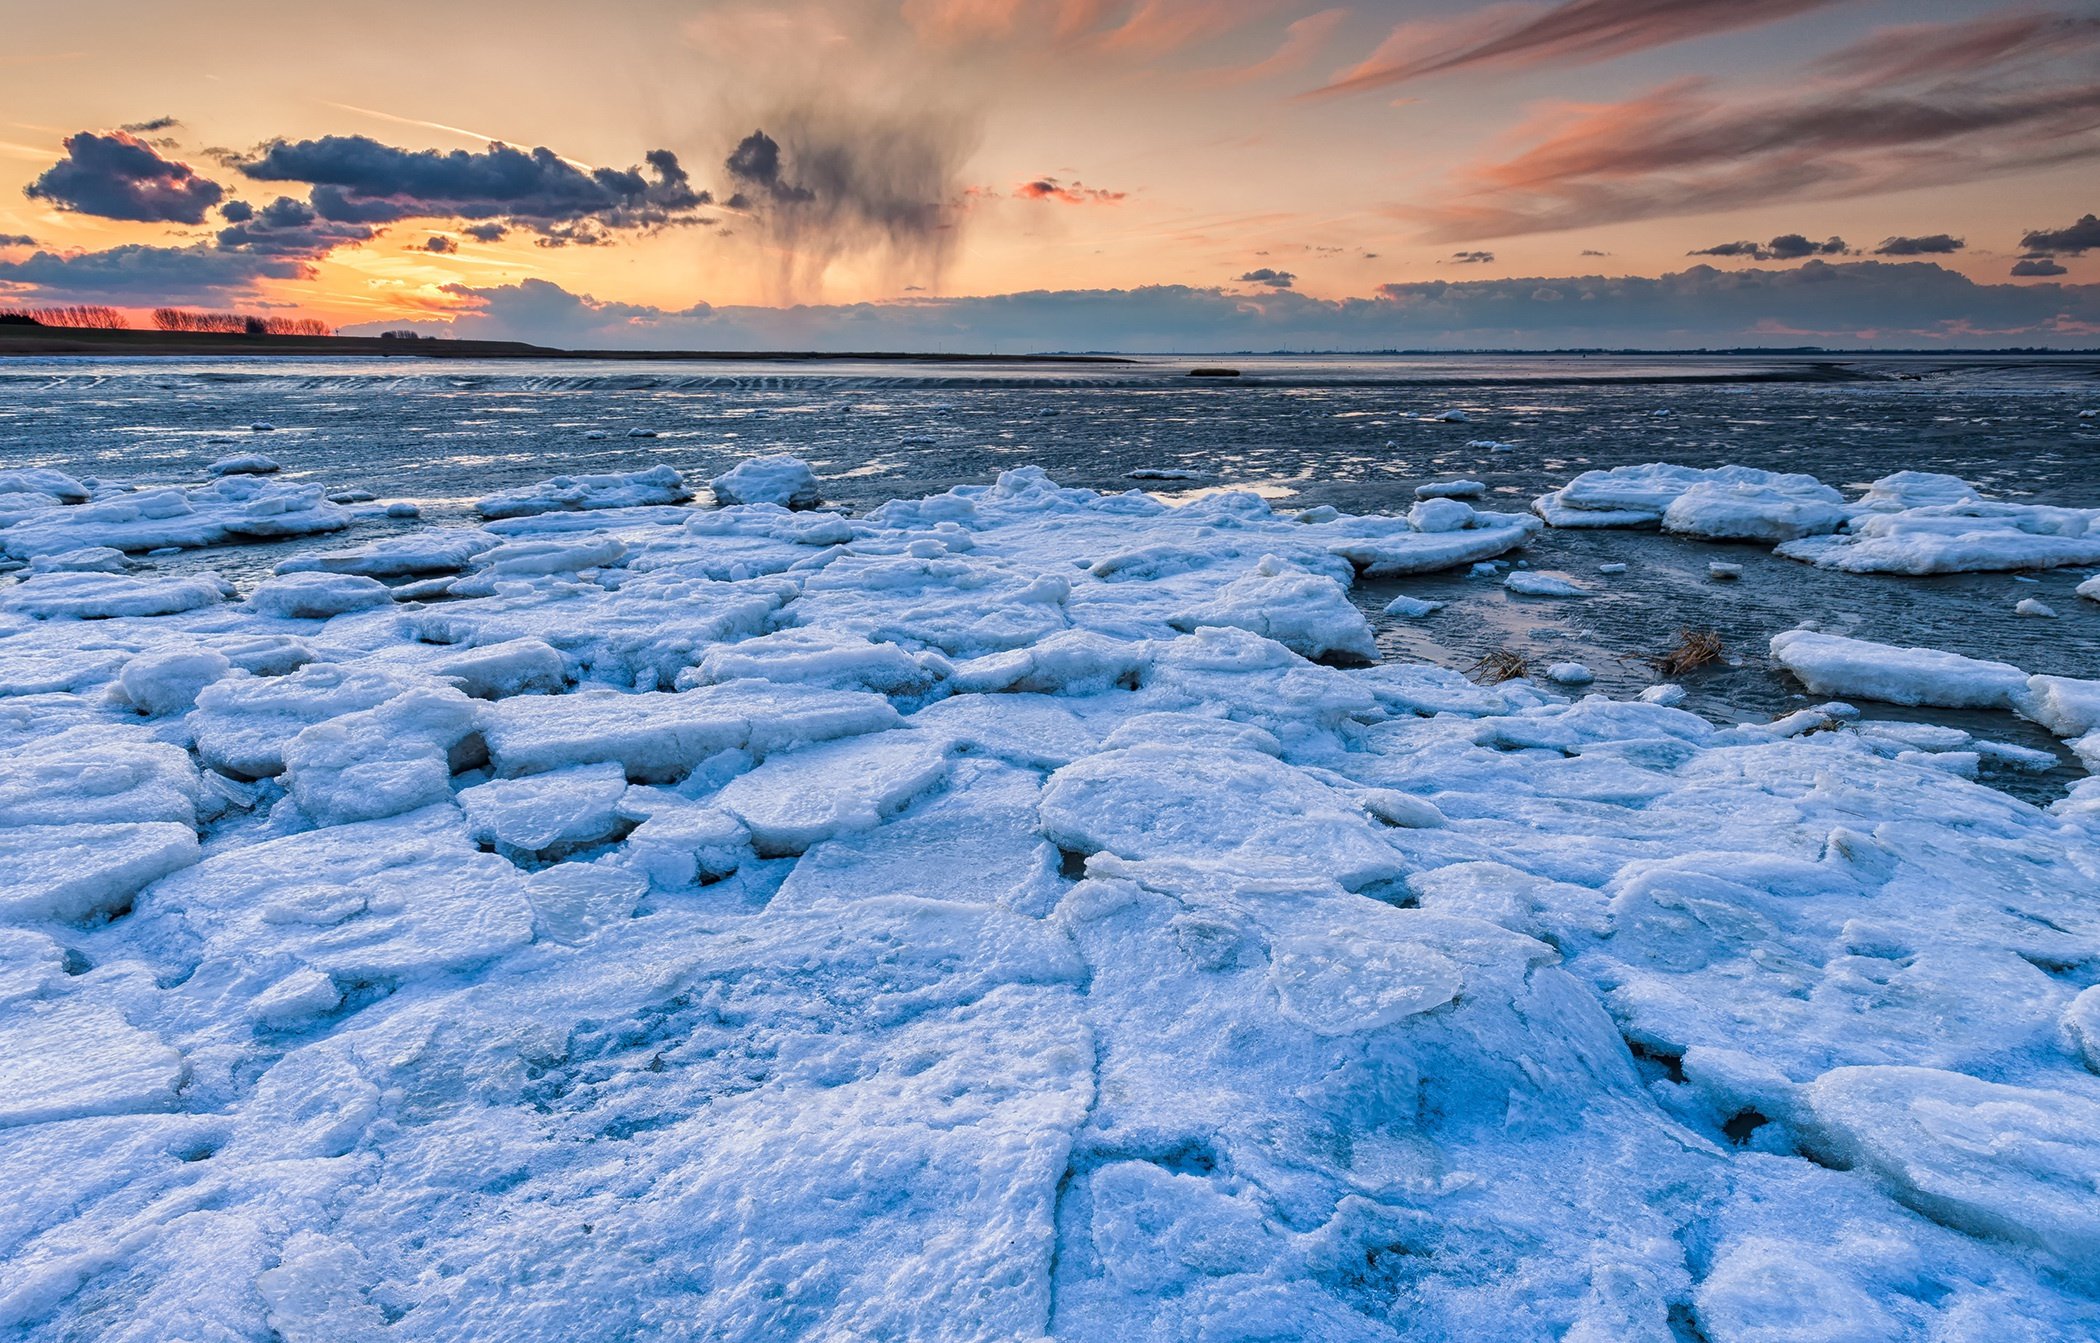 Тихо ночью покрывает лед. Лед на море. Море покрытое льдом. Ледяное море. Ледяное побережье.